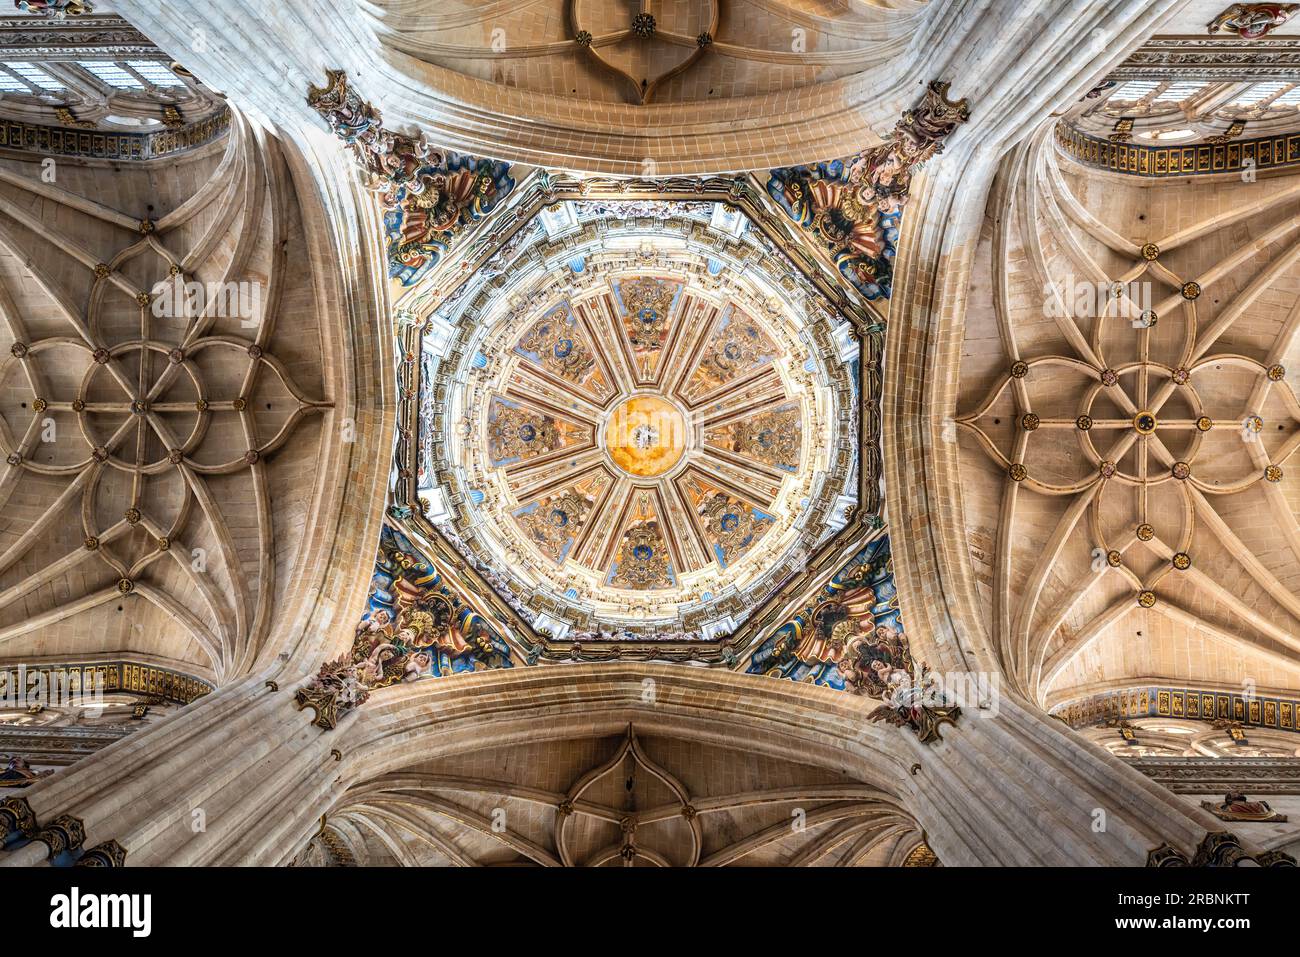 New Cathedral of Salamanca Ceiling - Salamanca, Spain Stock Photo